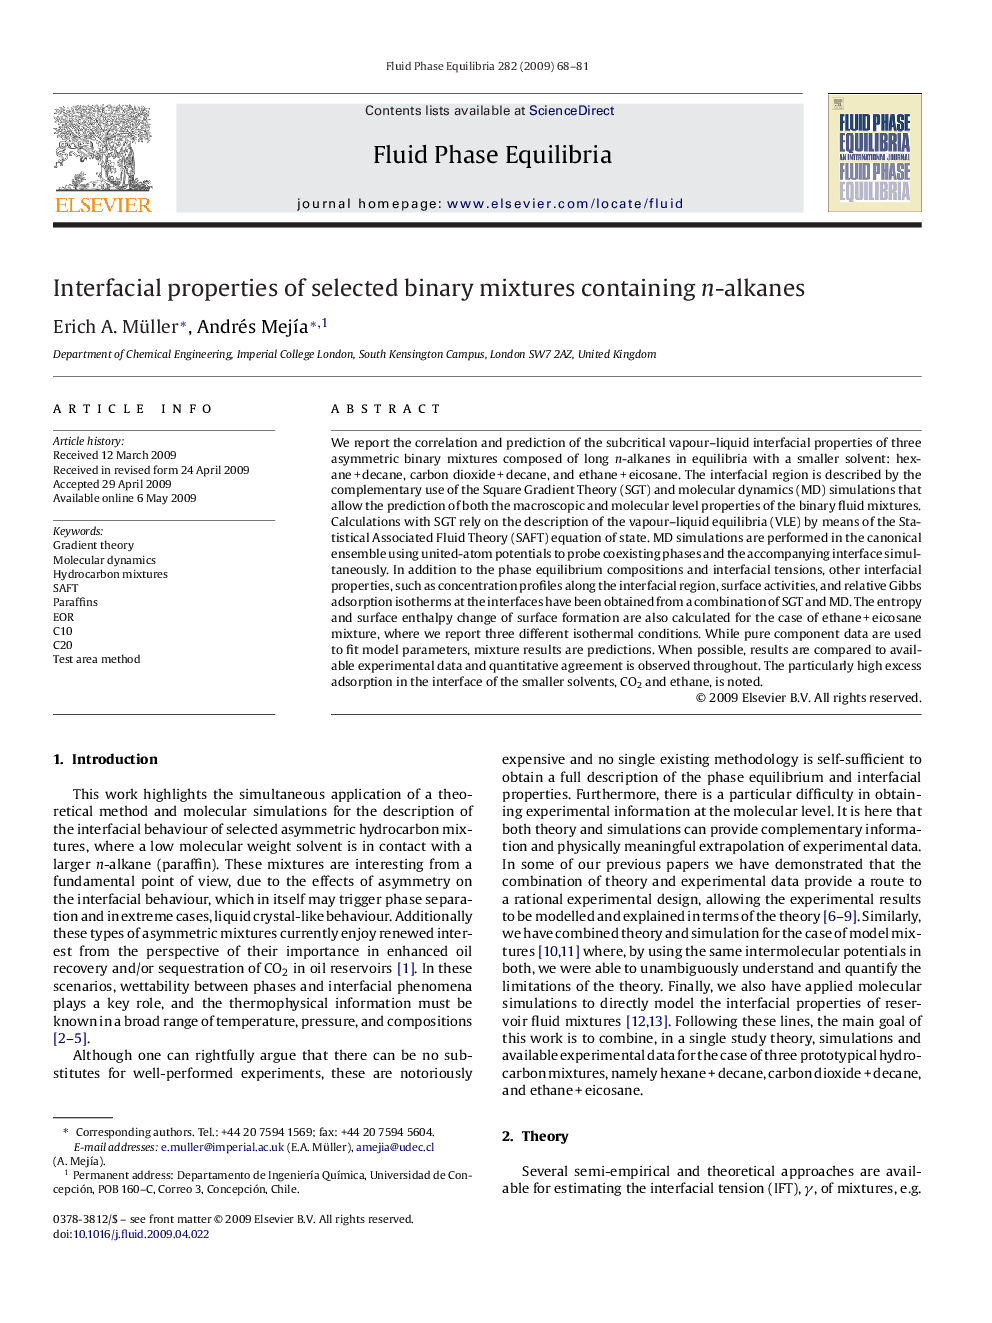 Interfacial properties of selected binary mixtures containing n-alkanes